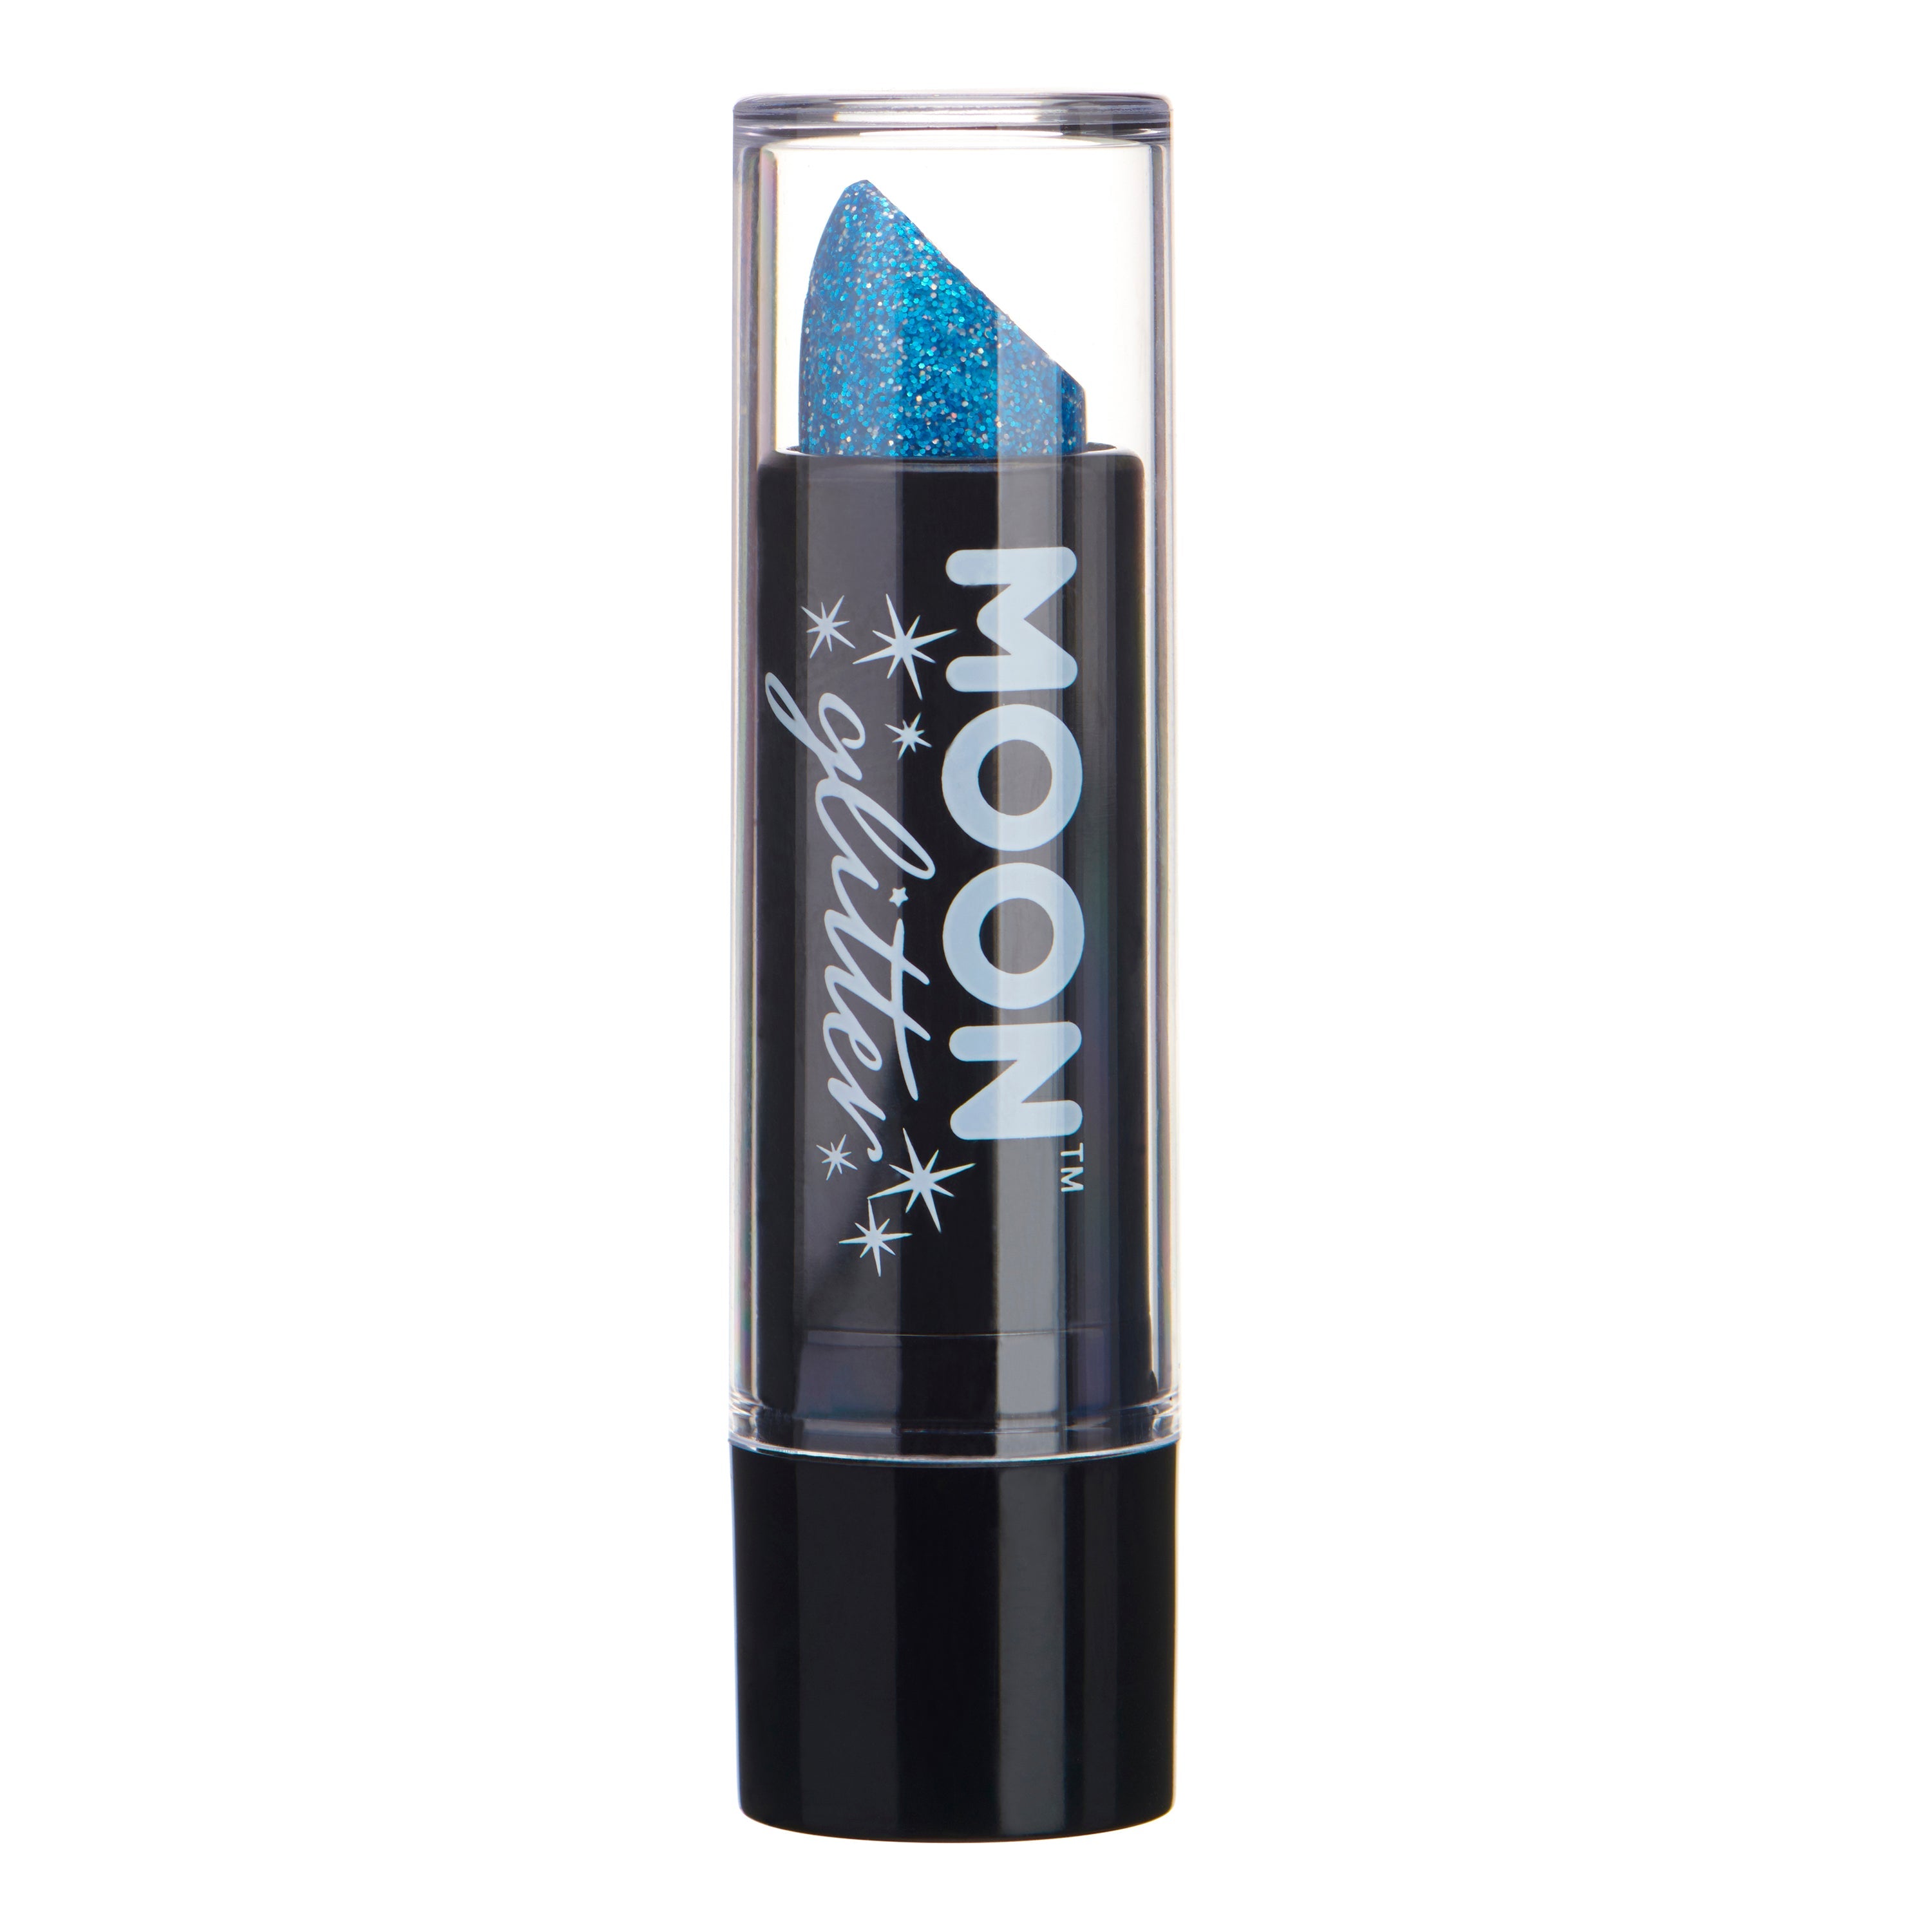 Blue - Holographic Glitter Lipstick, 5g. Cosmetically certified, FDA & Health Canada compliant and cruelty free.